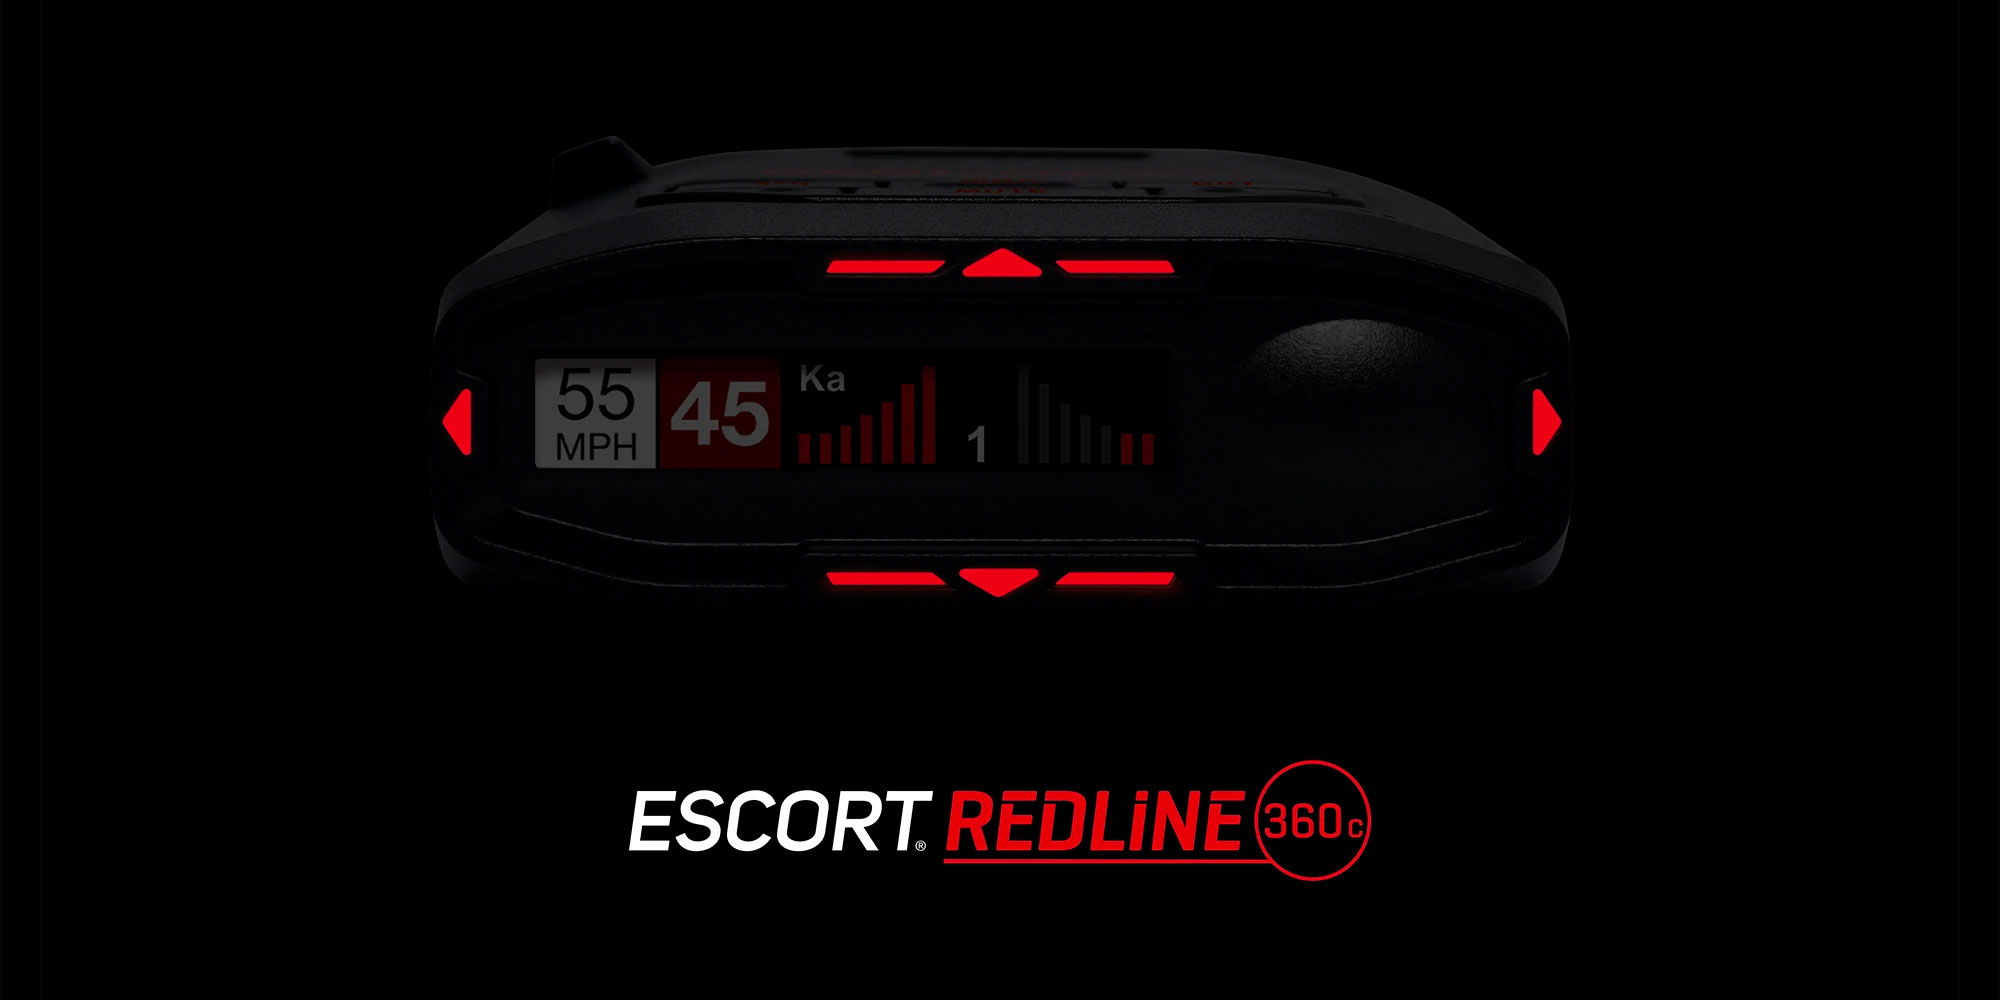 redline 360c availability